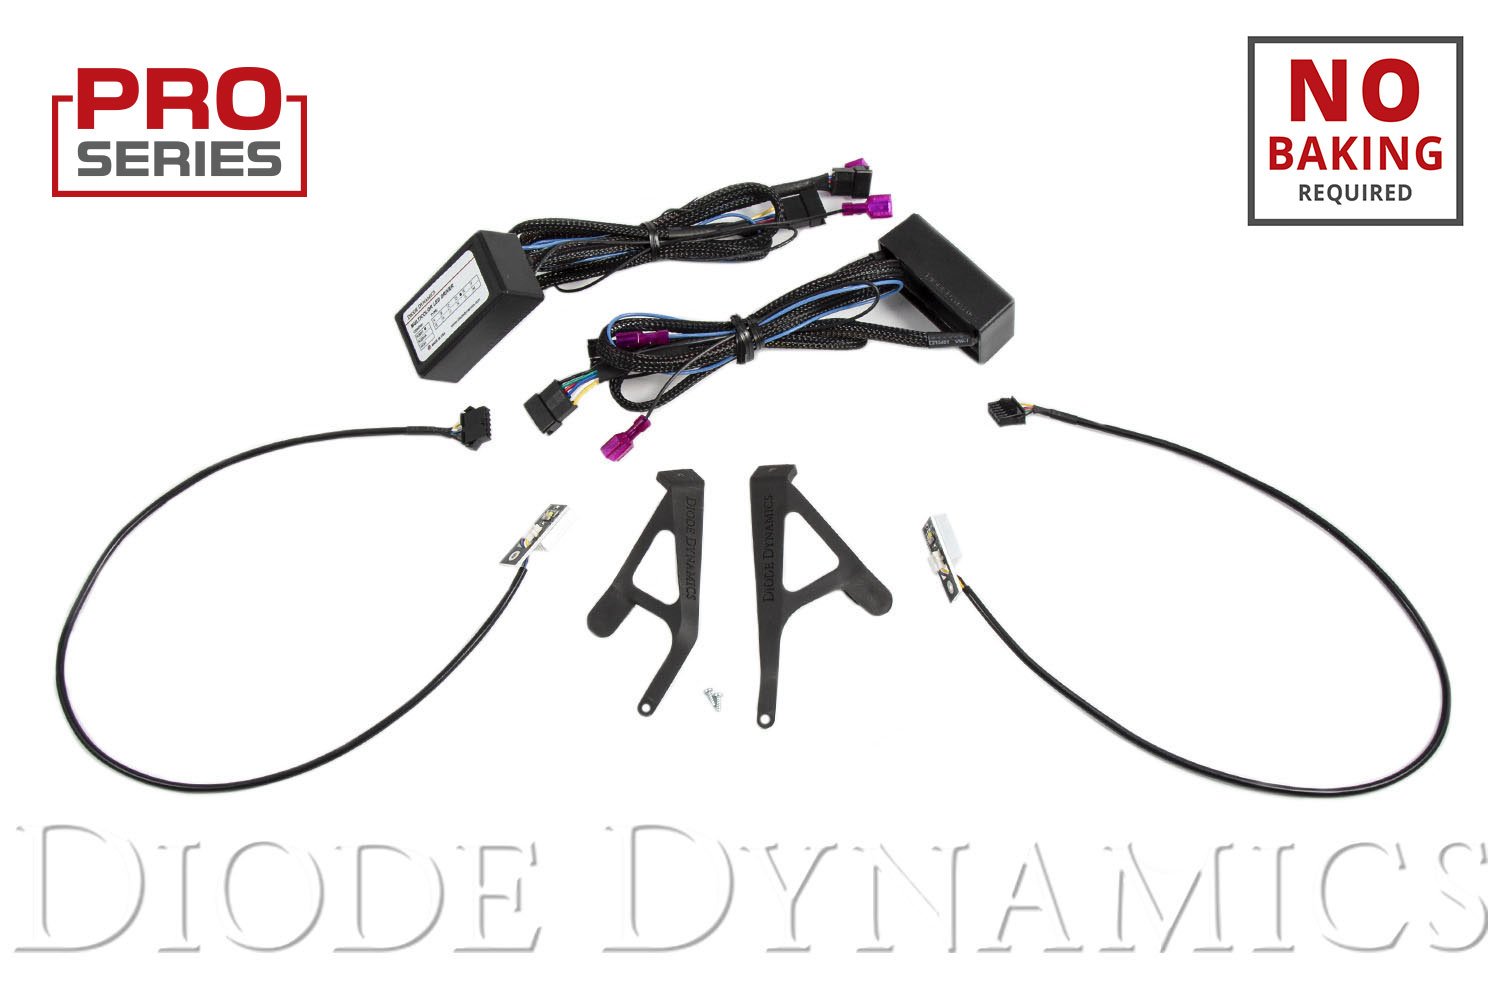 Diode Dynamics S550 عدة عيون موستانج شيطان متعدد الألوان